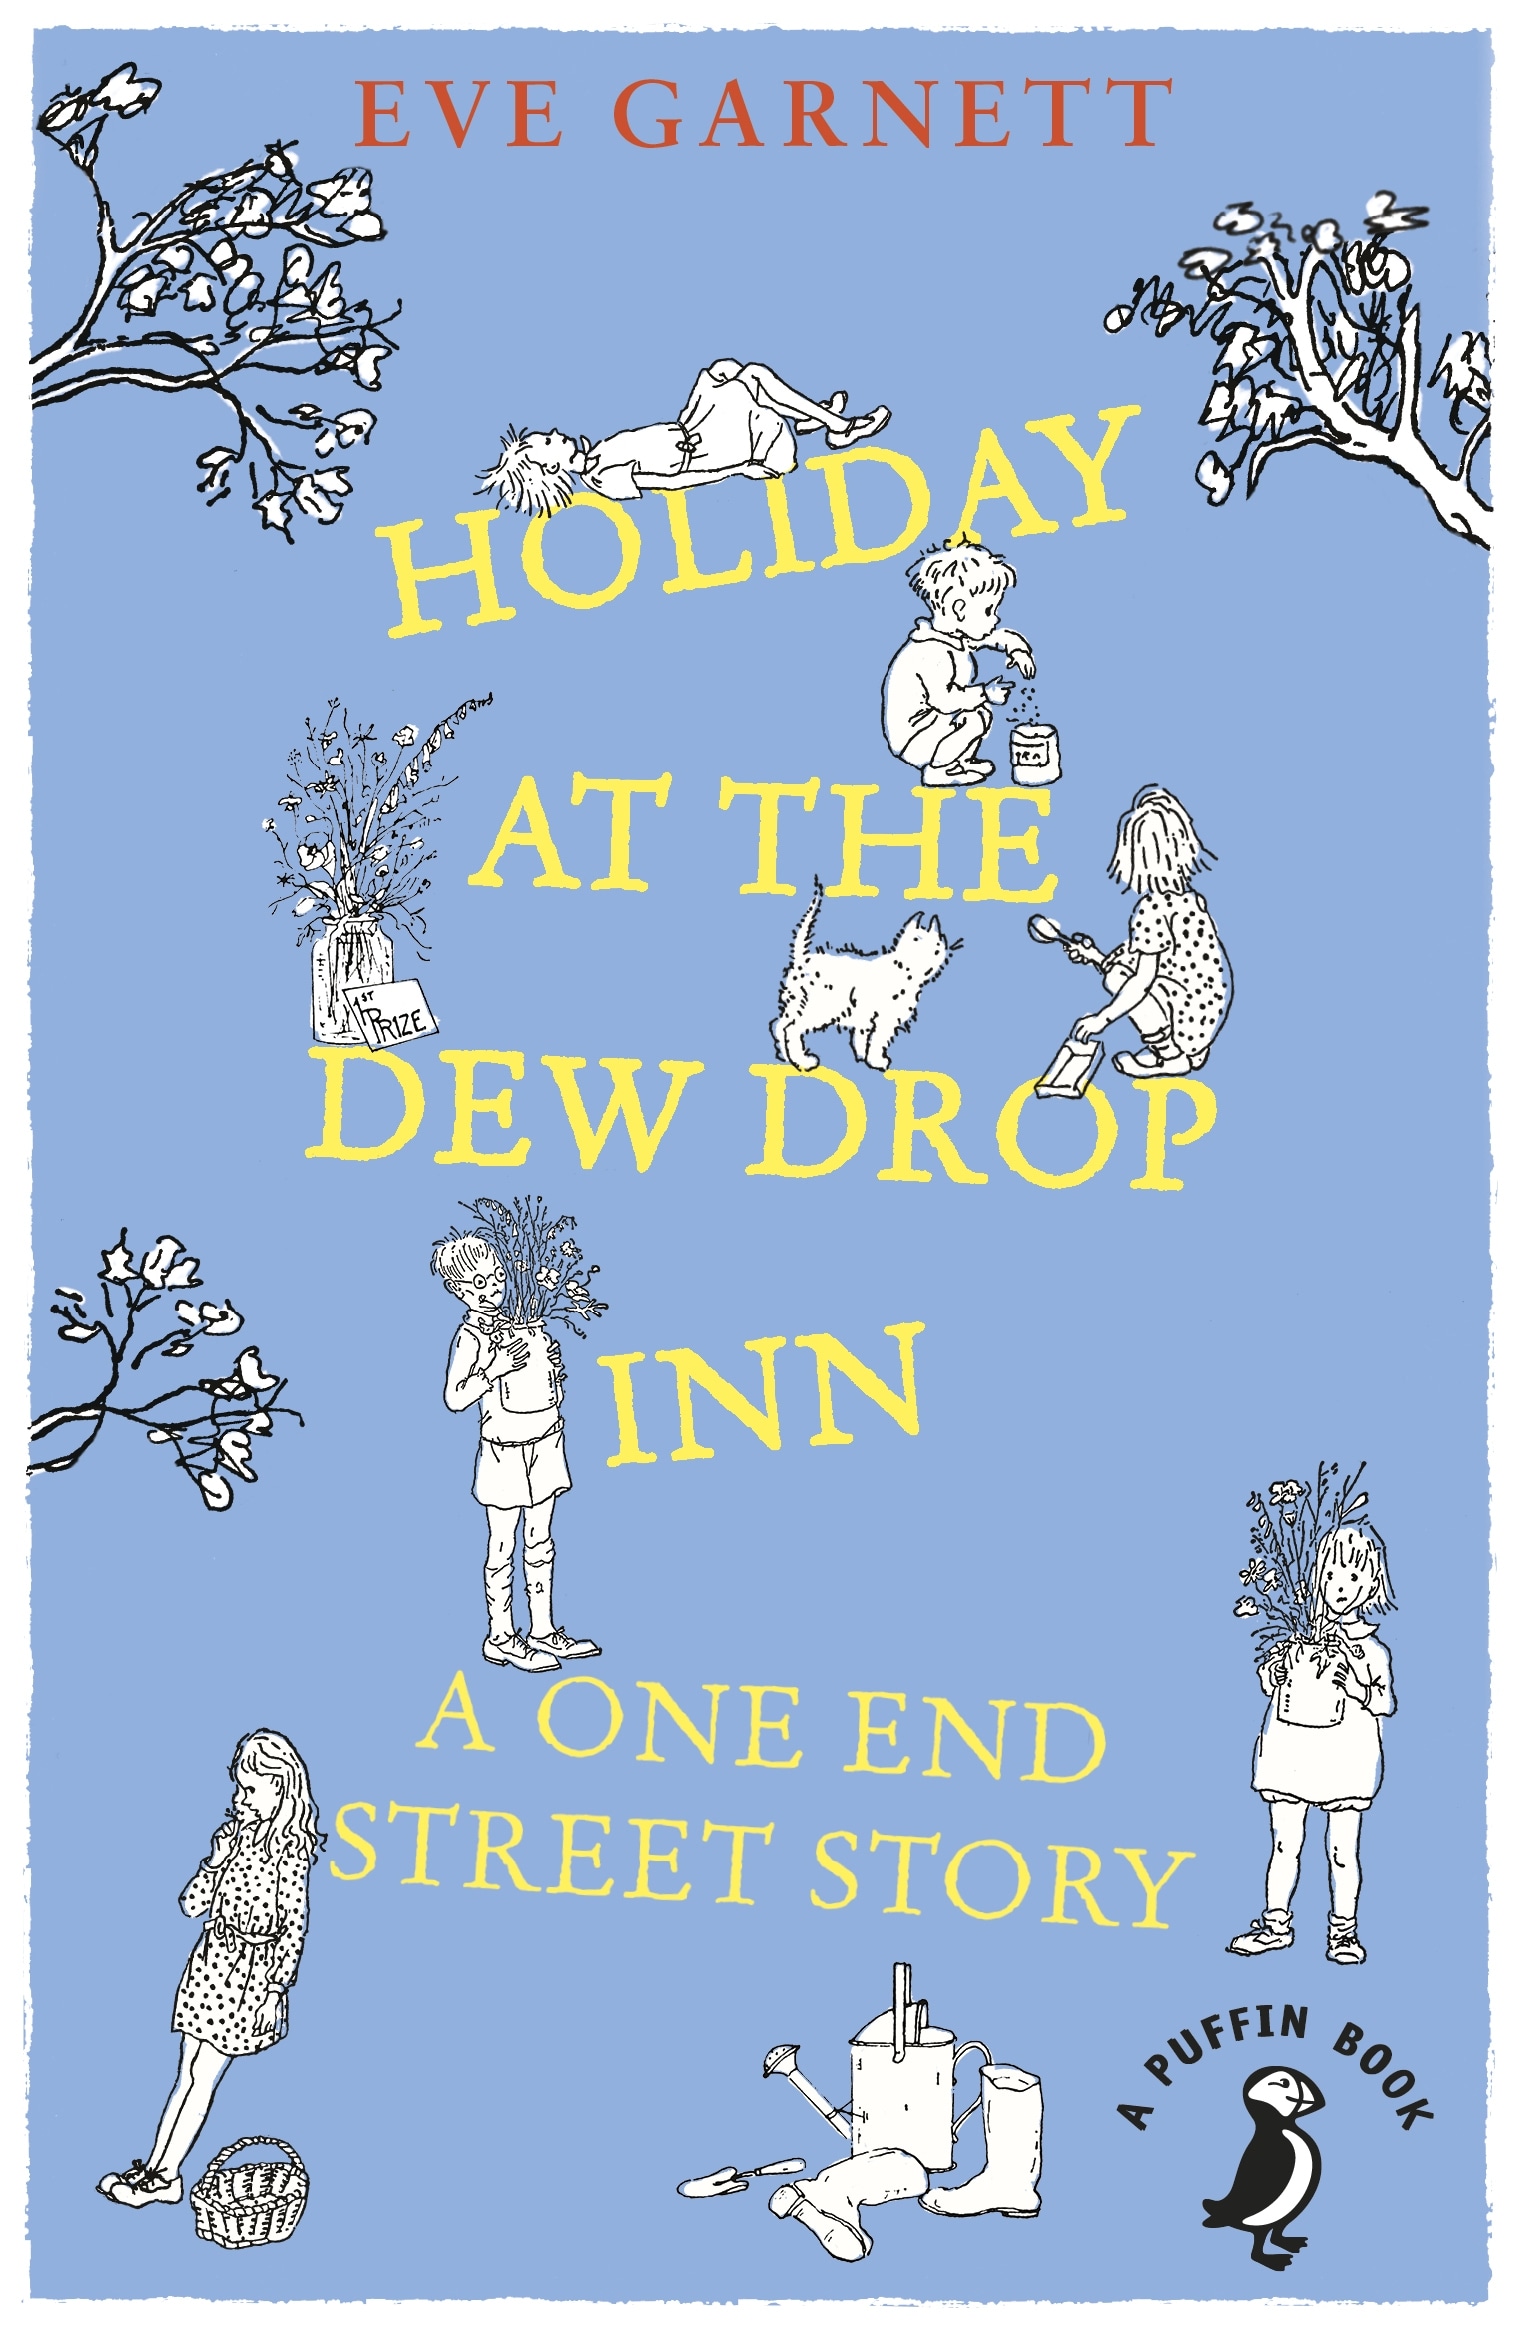 Book “Holiday at the Dew Drop Inn” by Eve Garnett — June 6, 2019